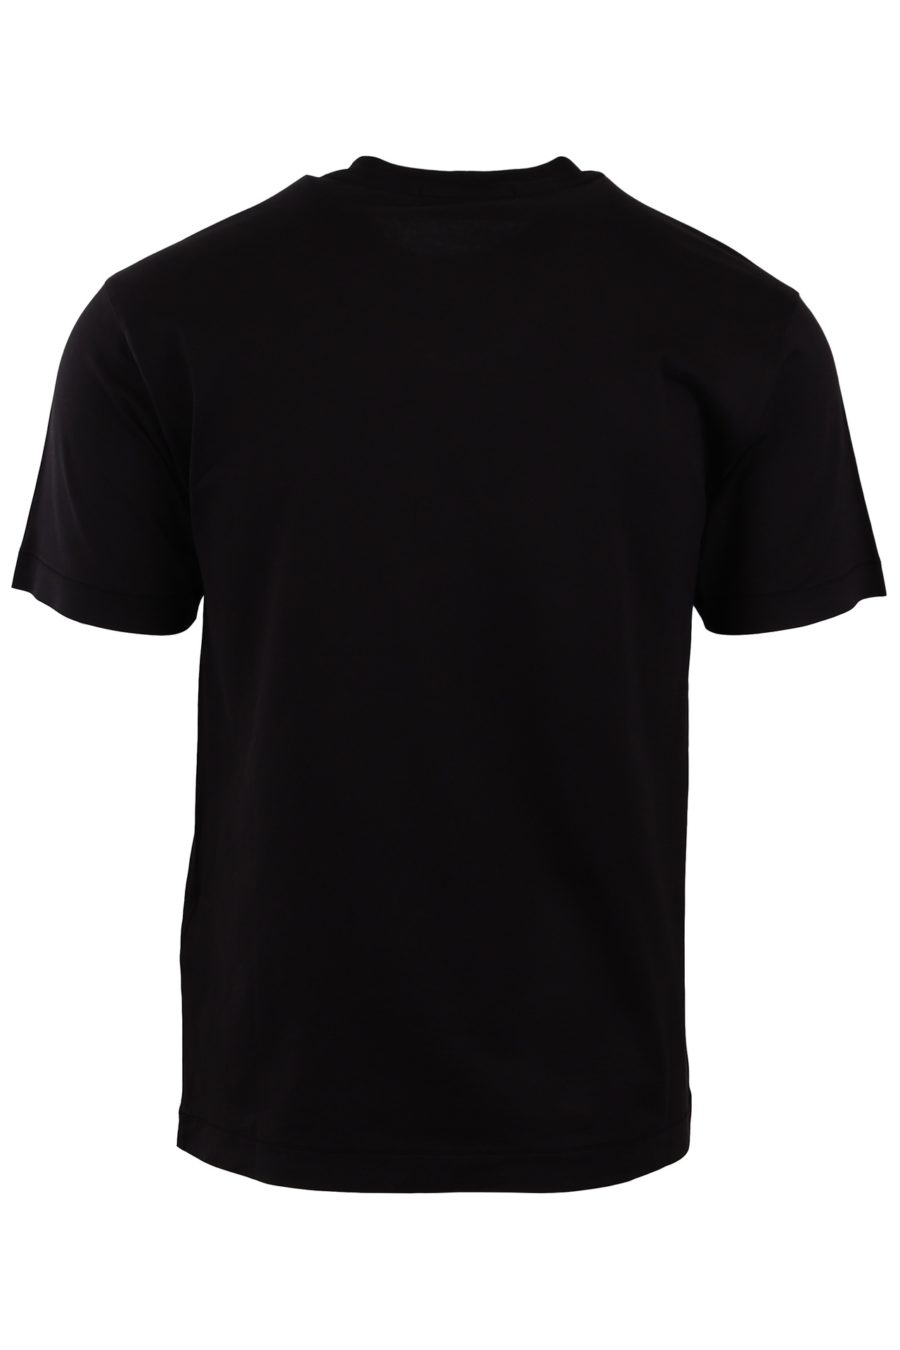 Stone Island T-shirt noir avec patch logo - acdc5929418009adbdda4a7ecba1b7730397024d 1